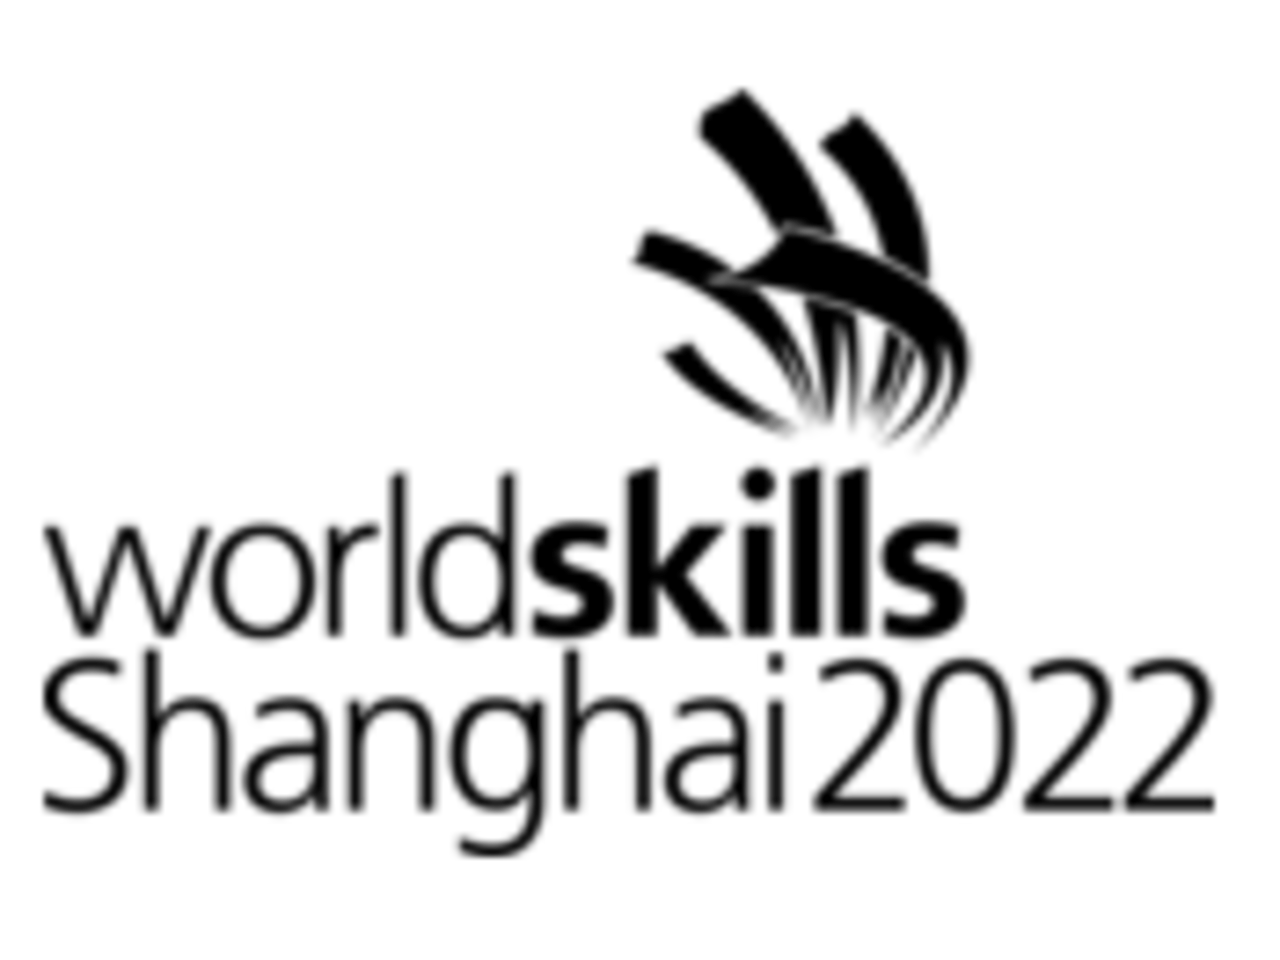 WorldSkills Shanghai 2022